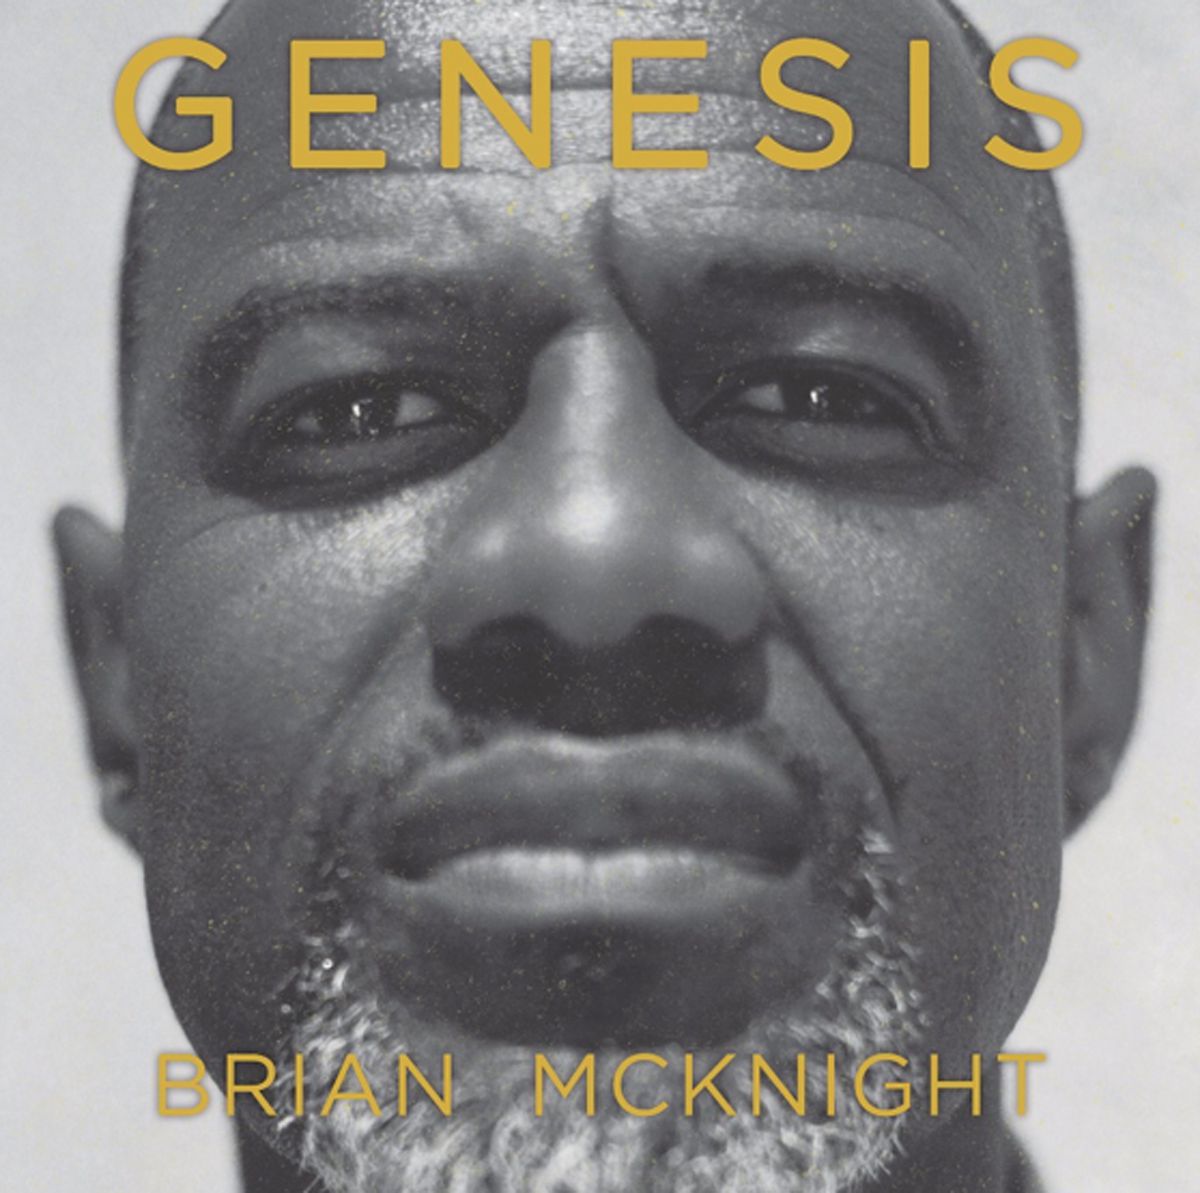 Brian McKnight’s latest album “Genesis.” | ILS Group